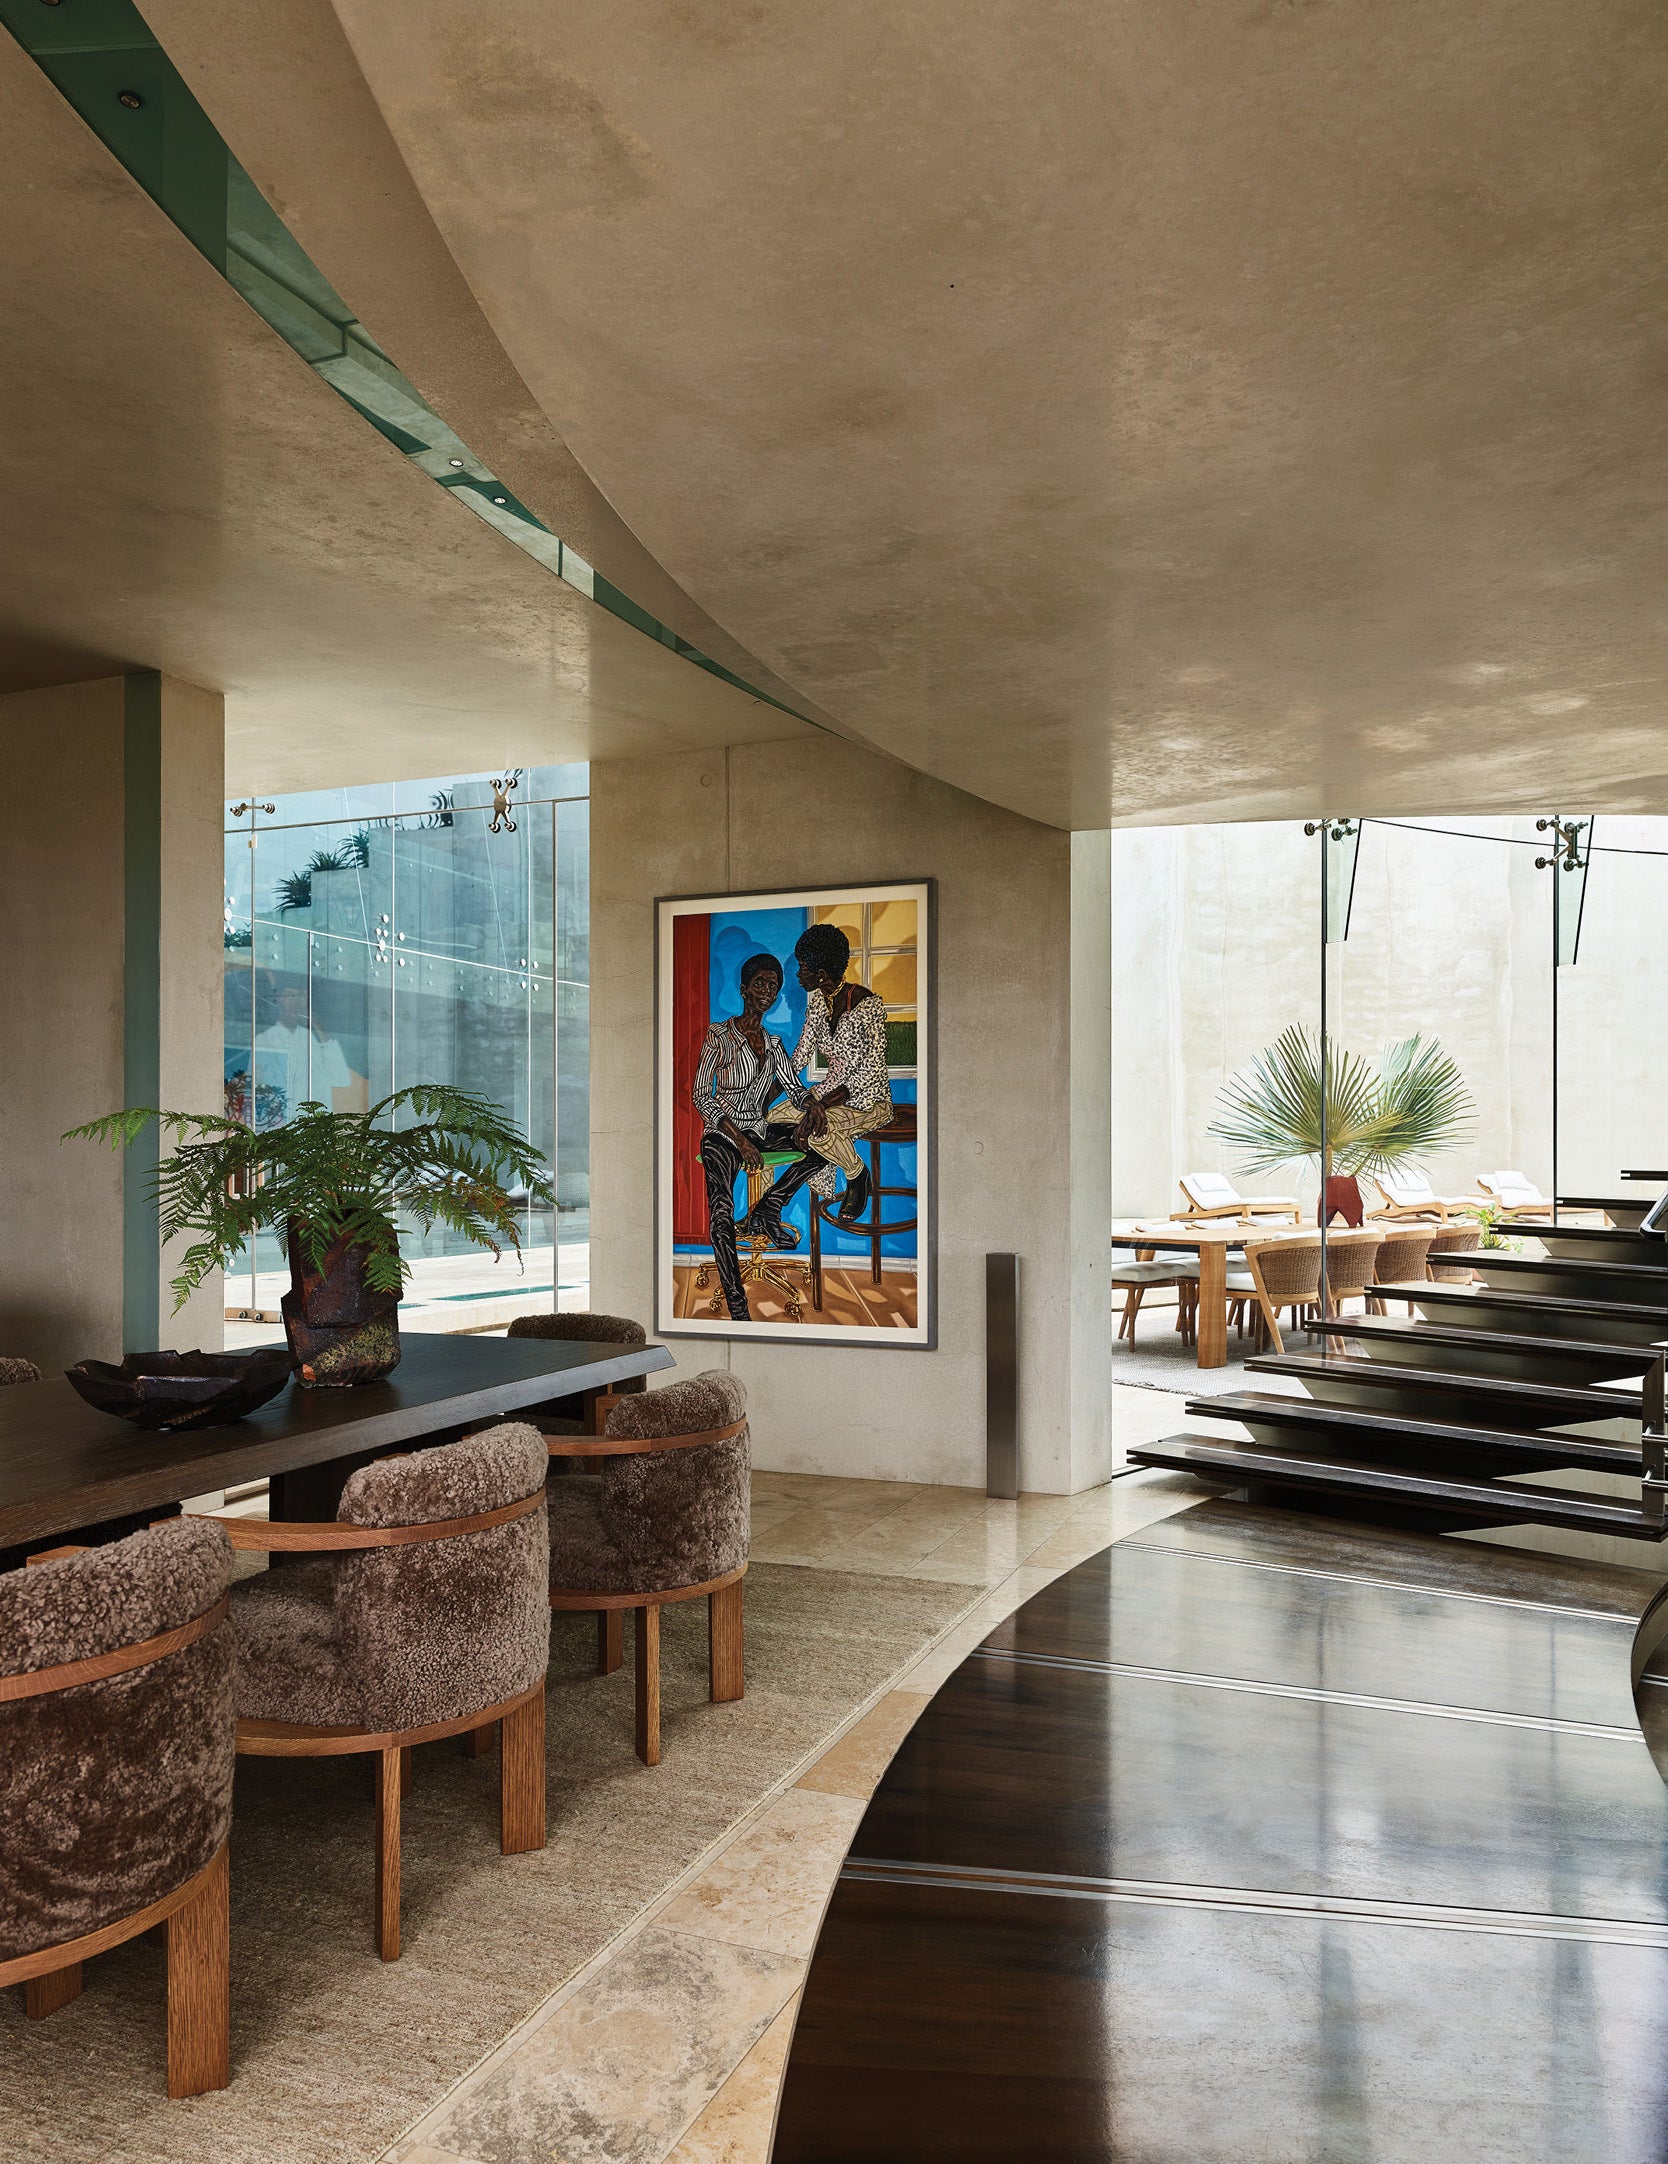 How To Do An Art-Filled Modernist Home Like Alicia Keys And Swizz Beatz’s Cali Pad